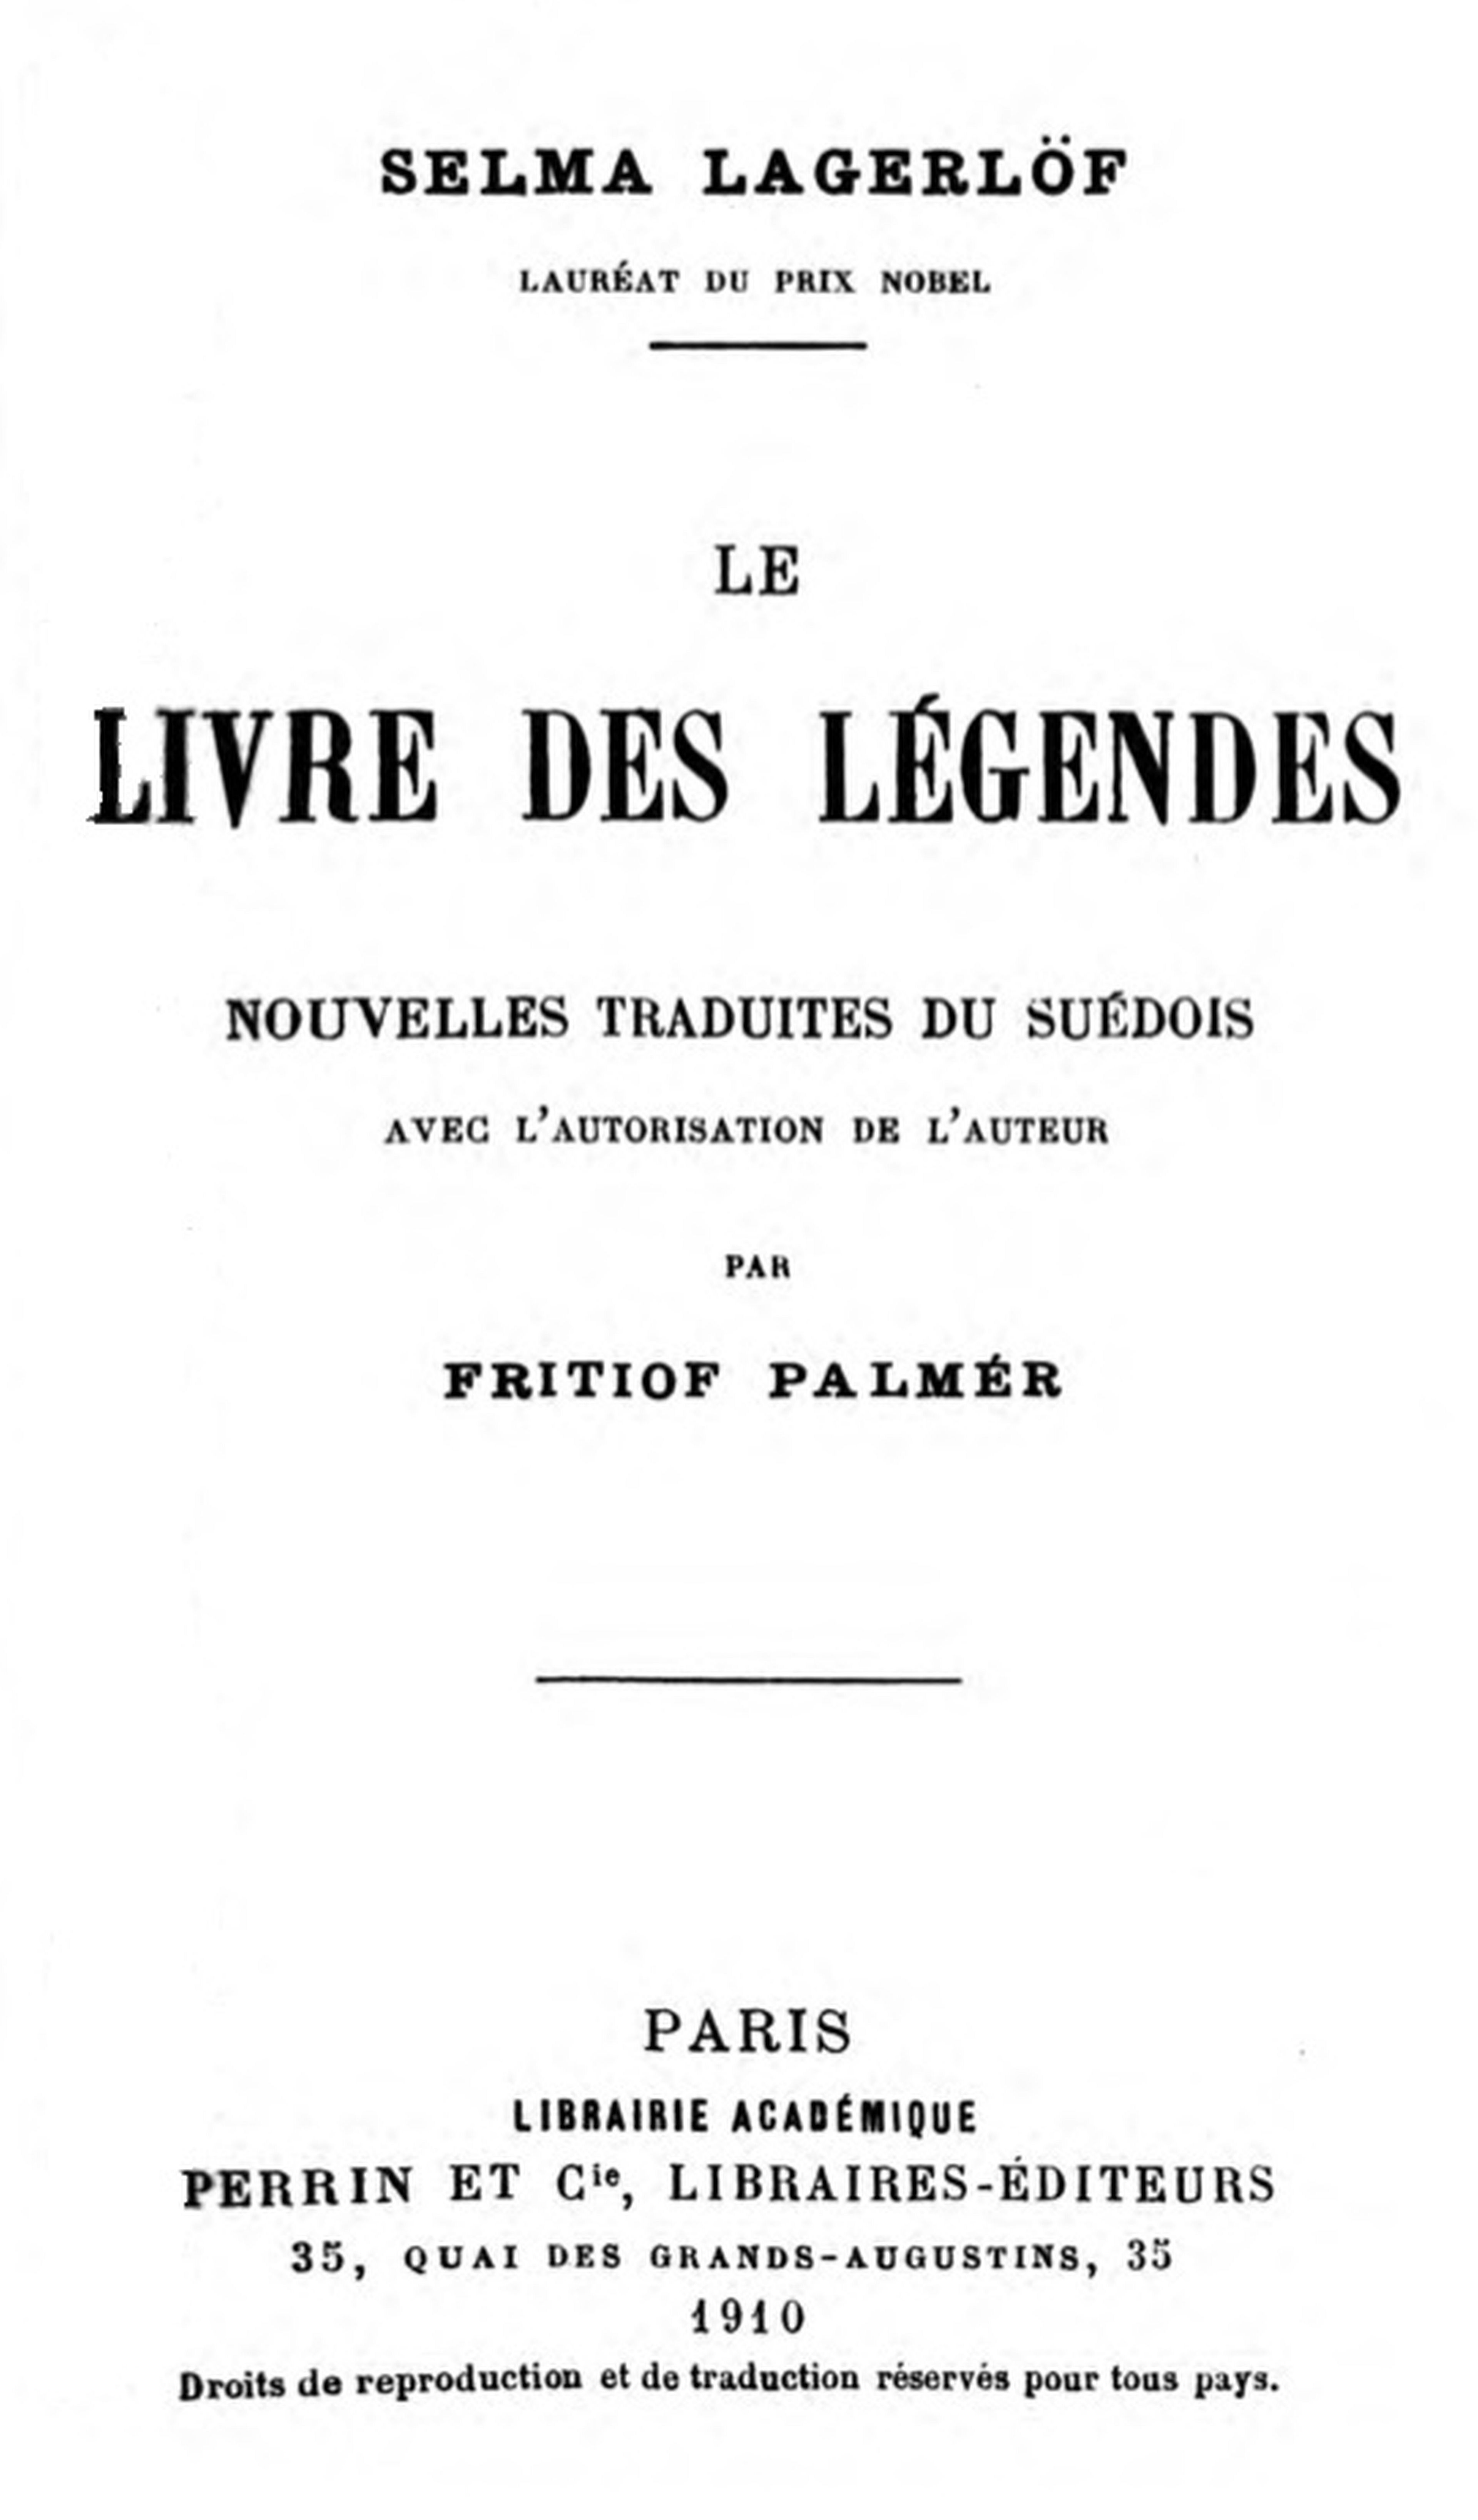 The Project Gutenberg eBook of Le Livre des Légendes, by Selma Lagerlöf.